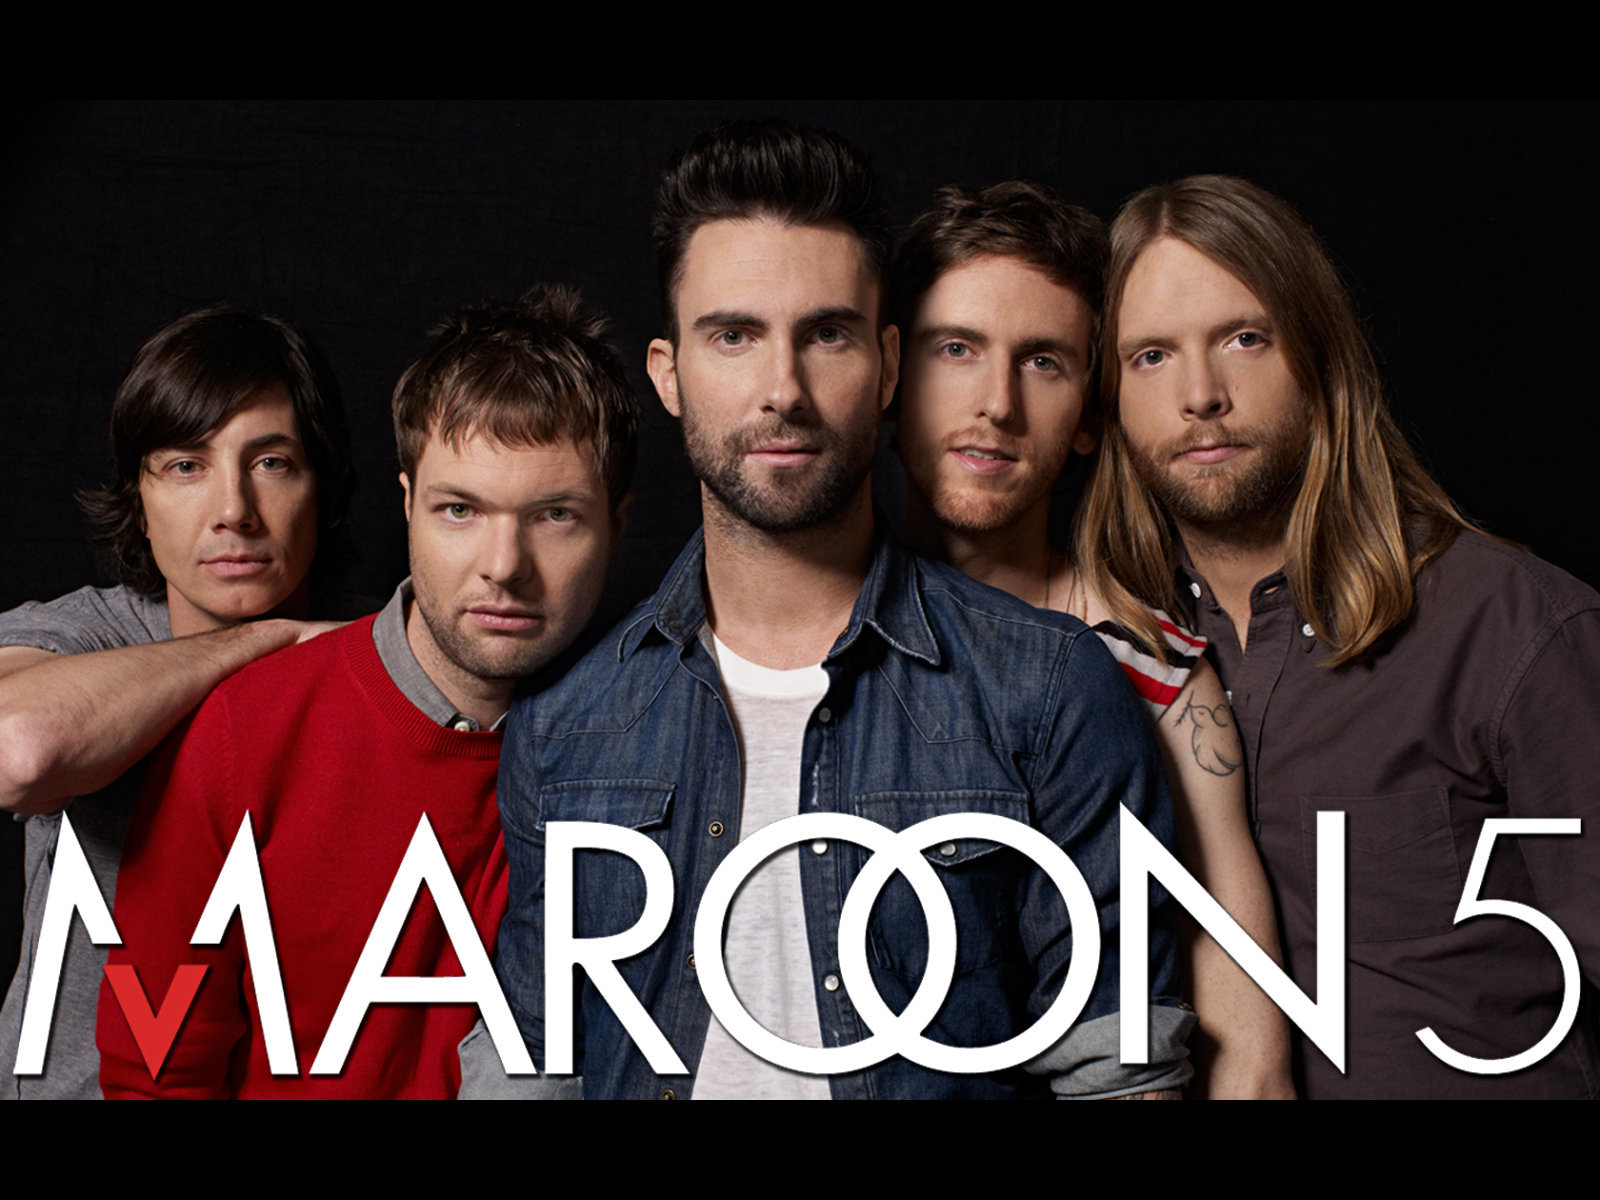 Maroon 5 Pictures